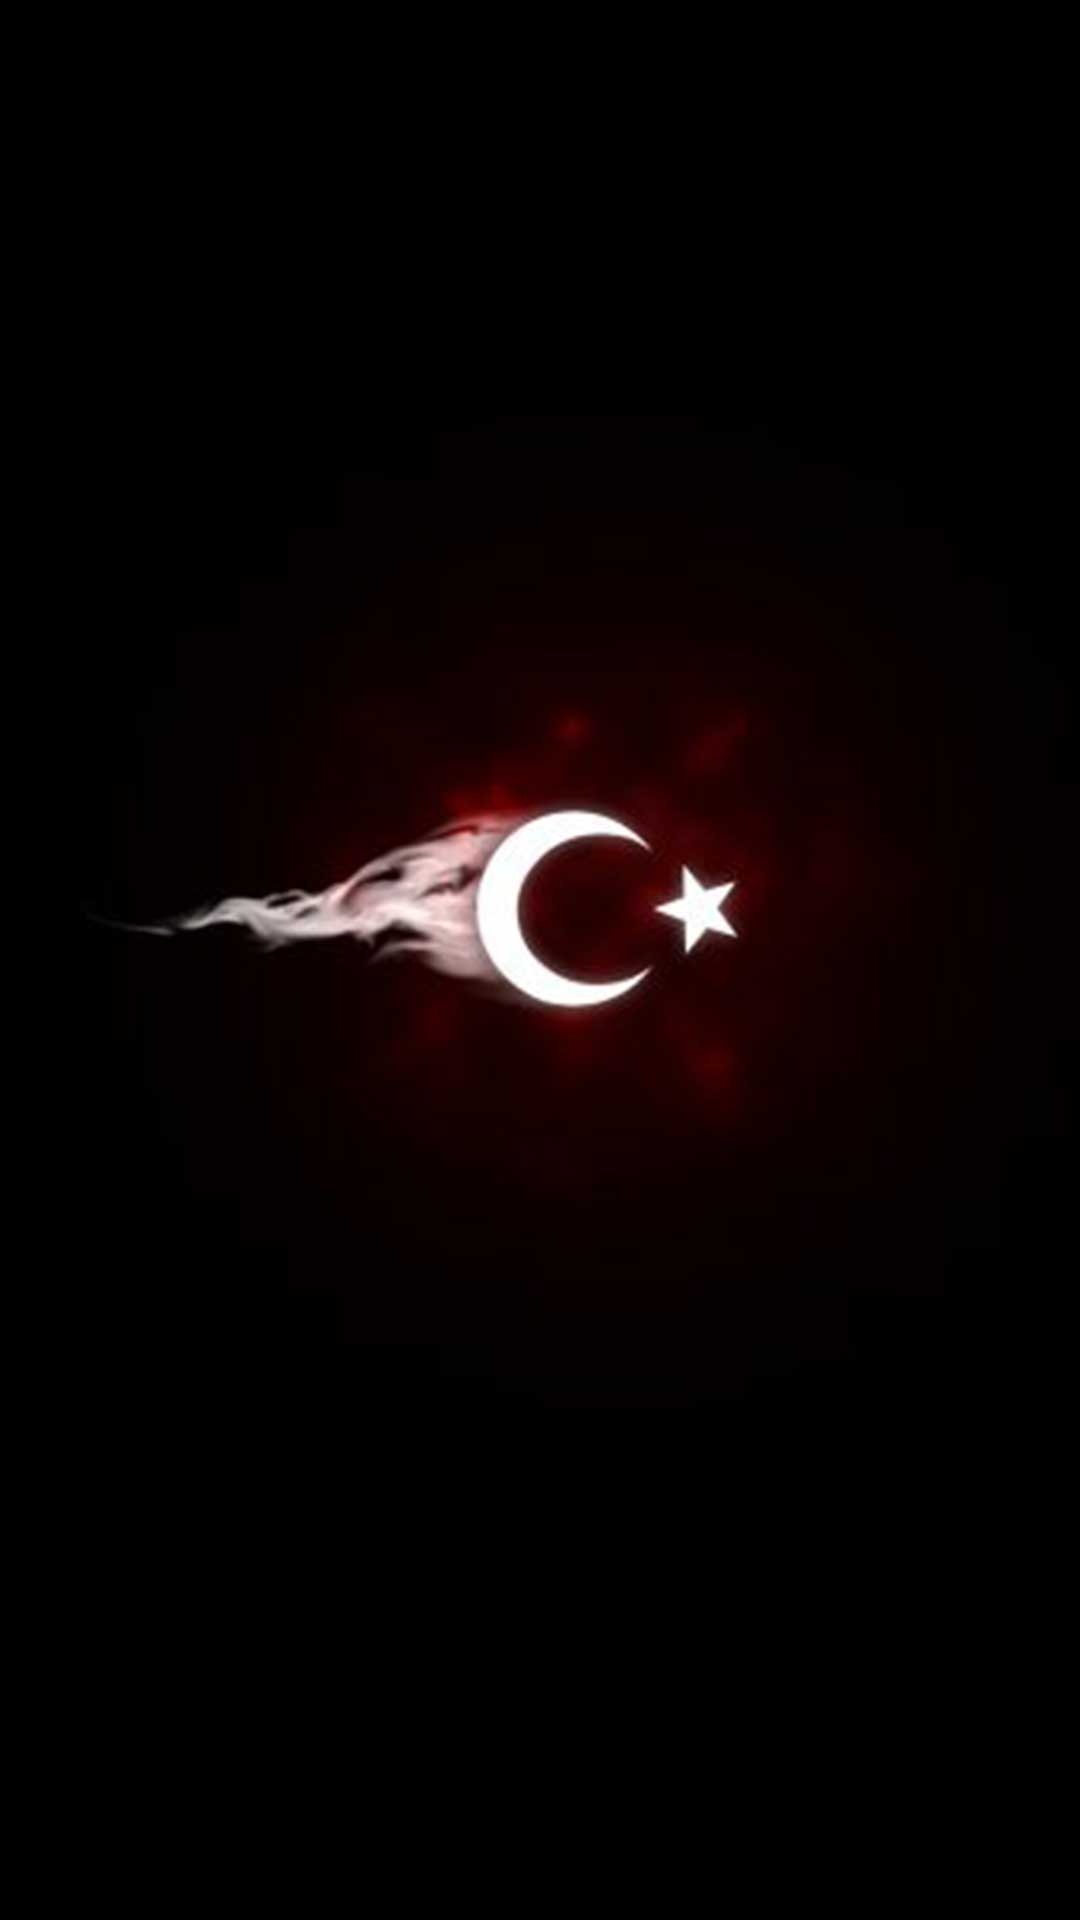 whatsapp turk bayragi arkaplan resimleri 11